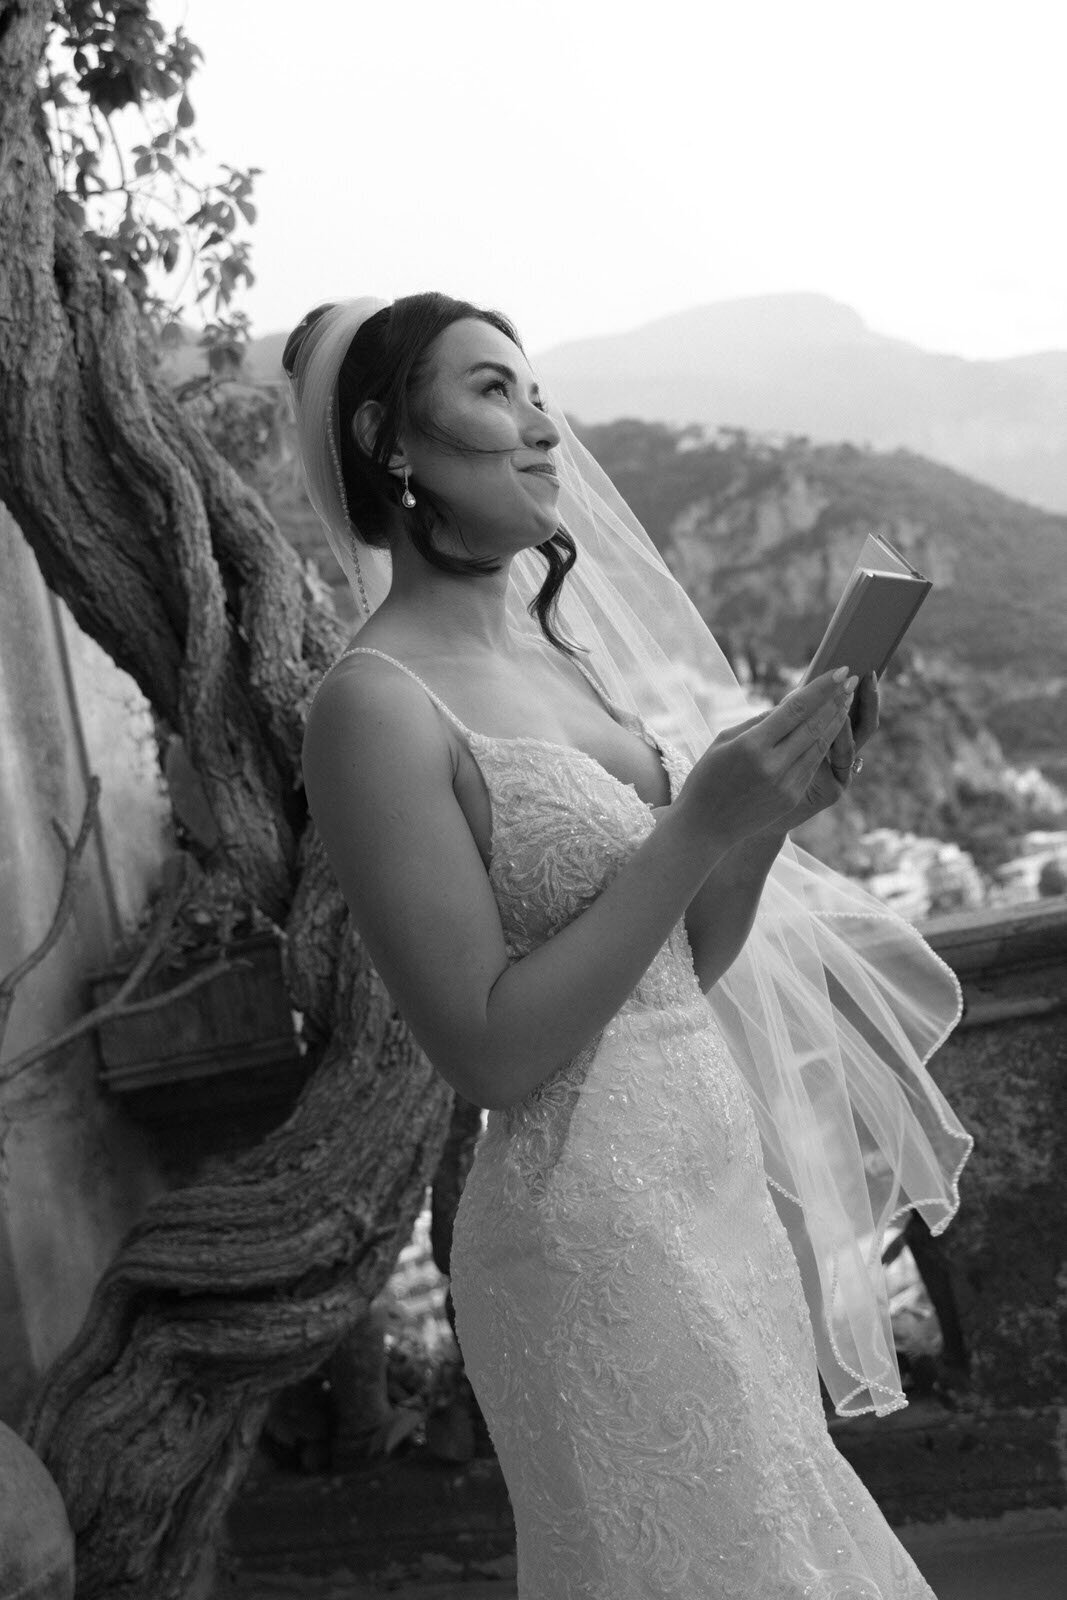 Flora_And_Grace_Positano_Editorial_Wedding_Photographer (28 von 88)